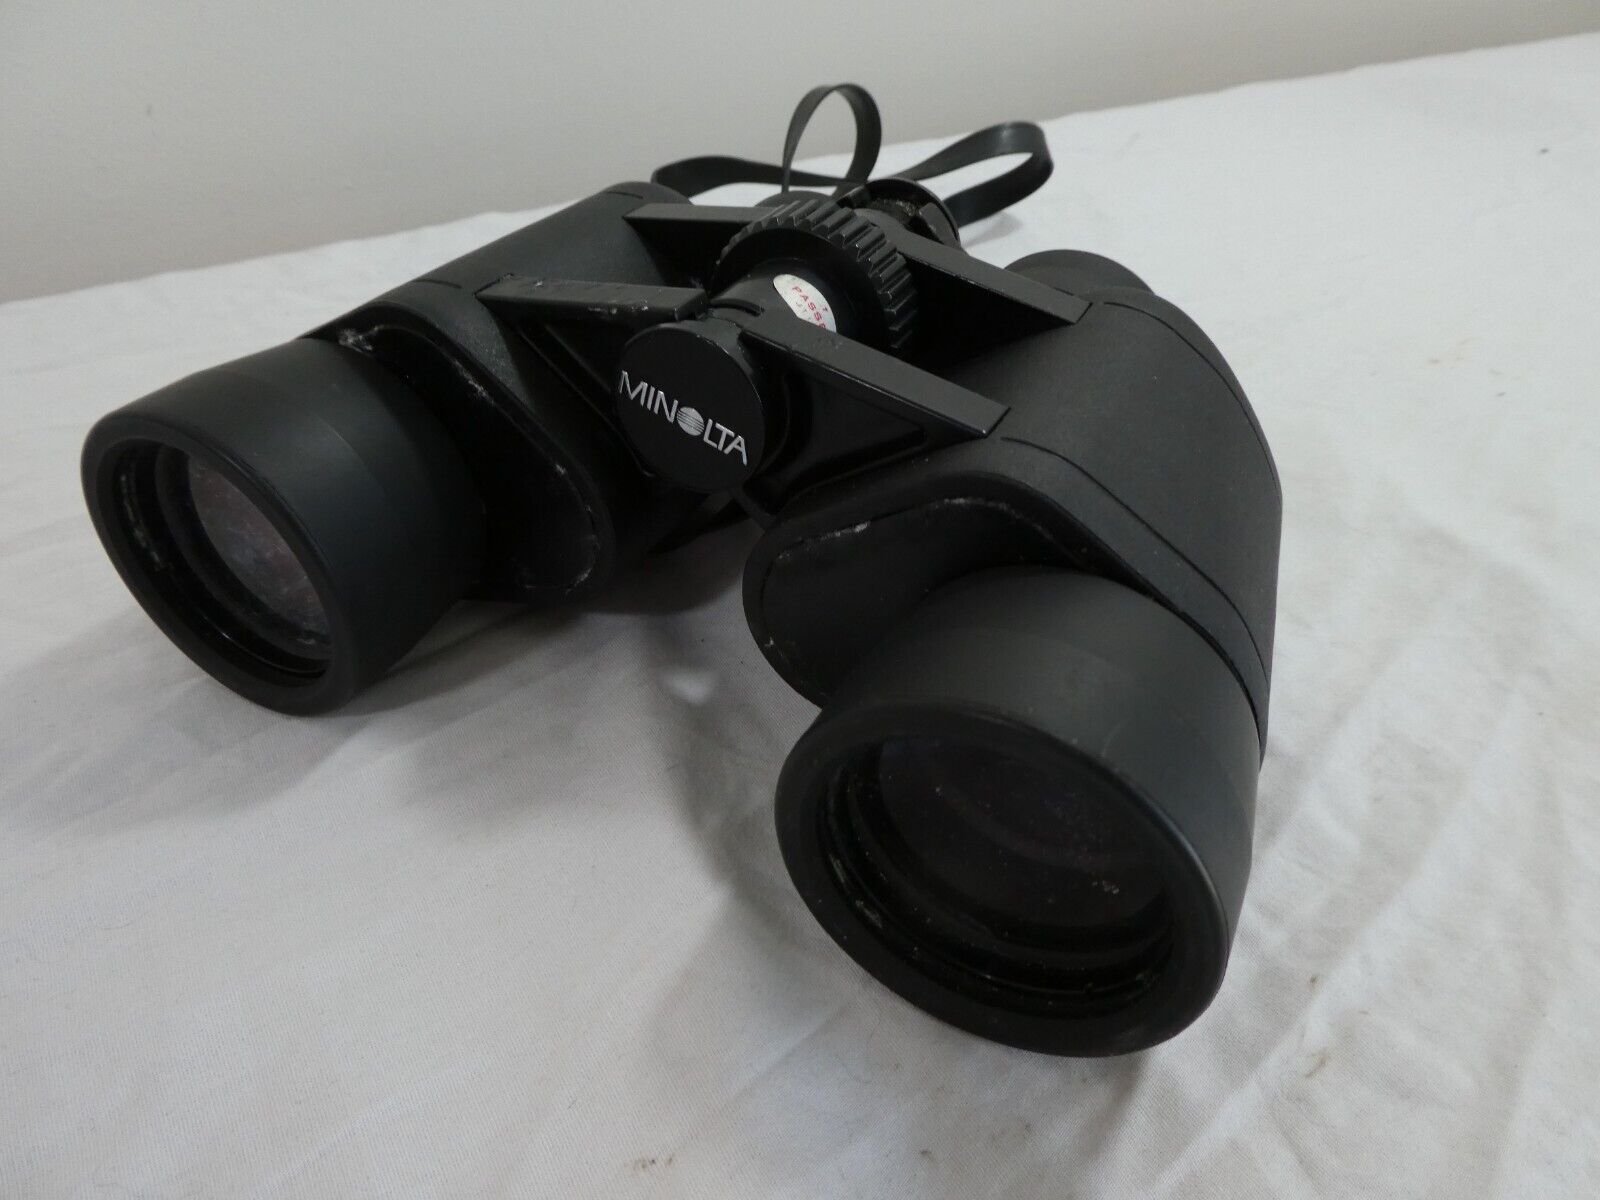 Minolta Binoculars Vintage Black Standard Extra Wide 9.5 Degrees Strap Hiking